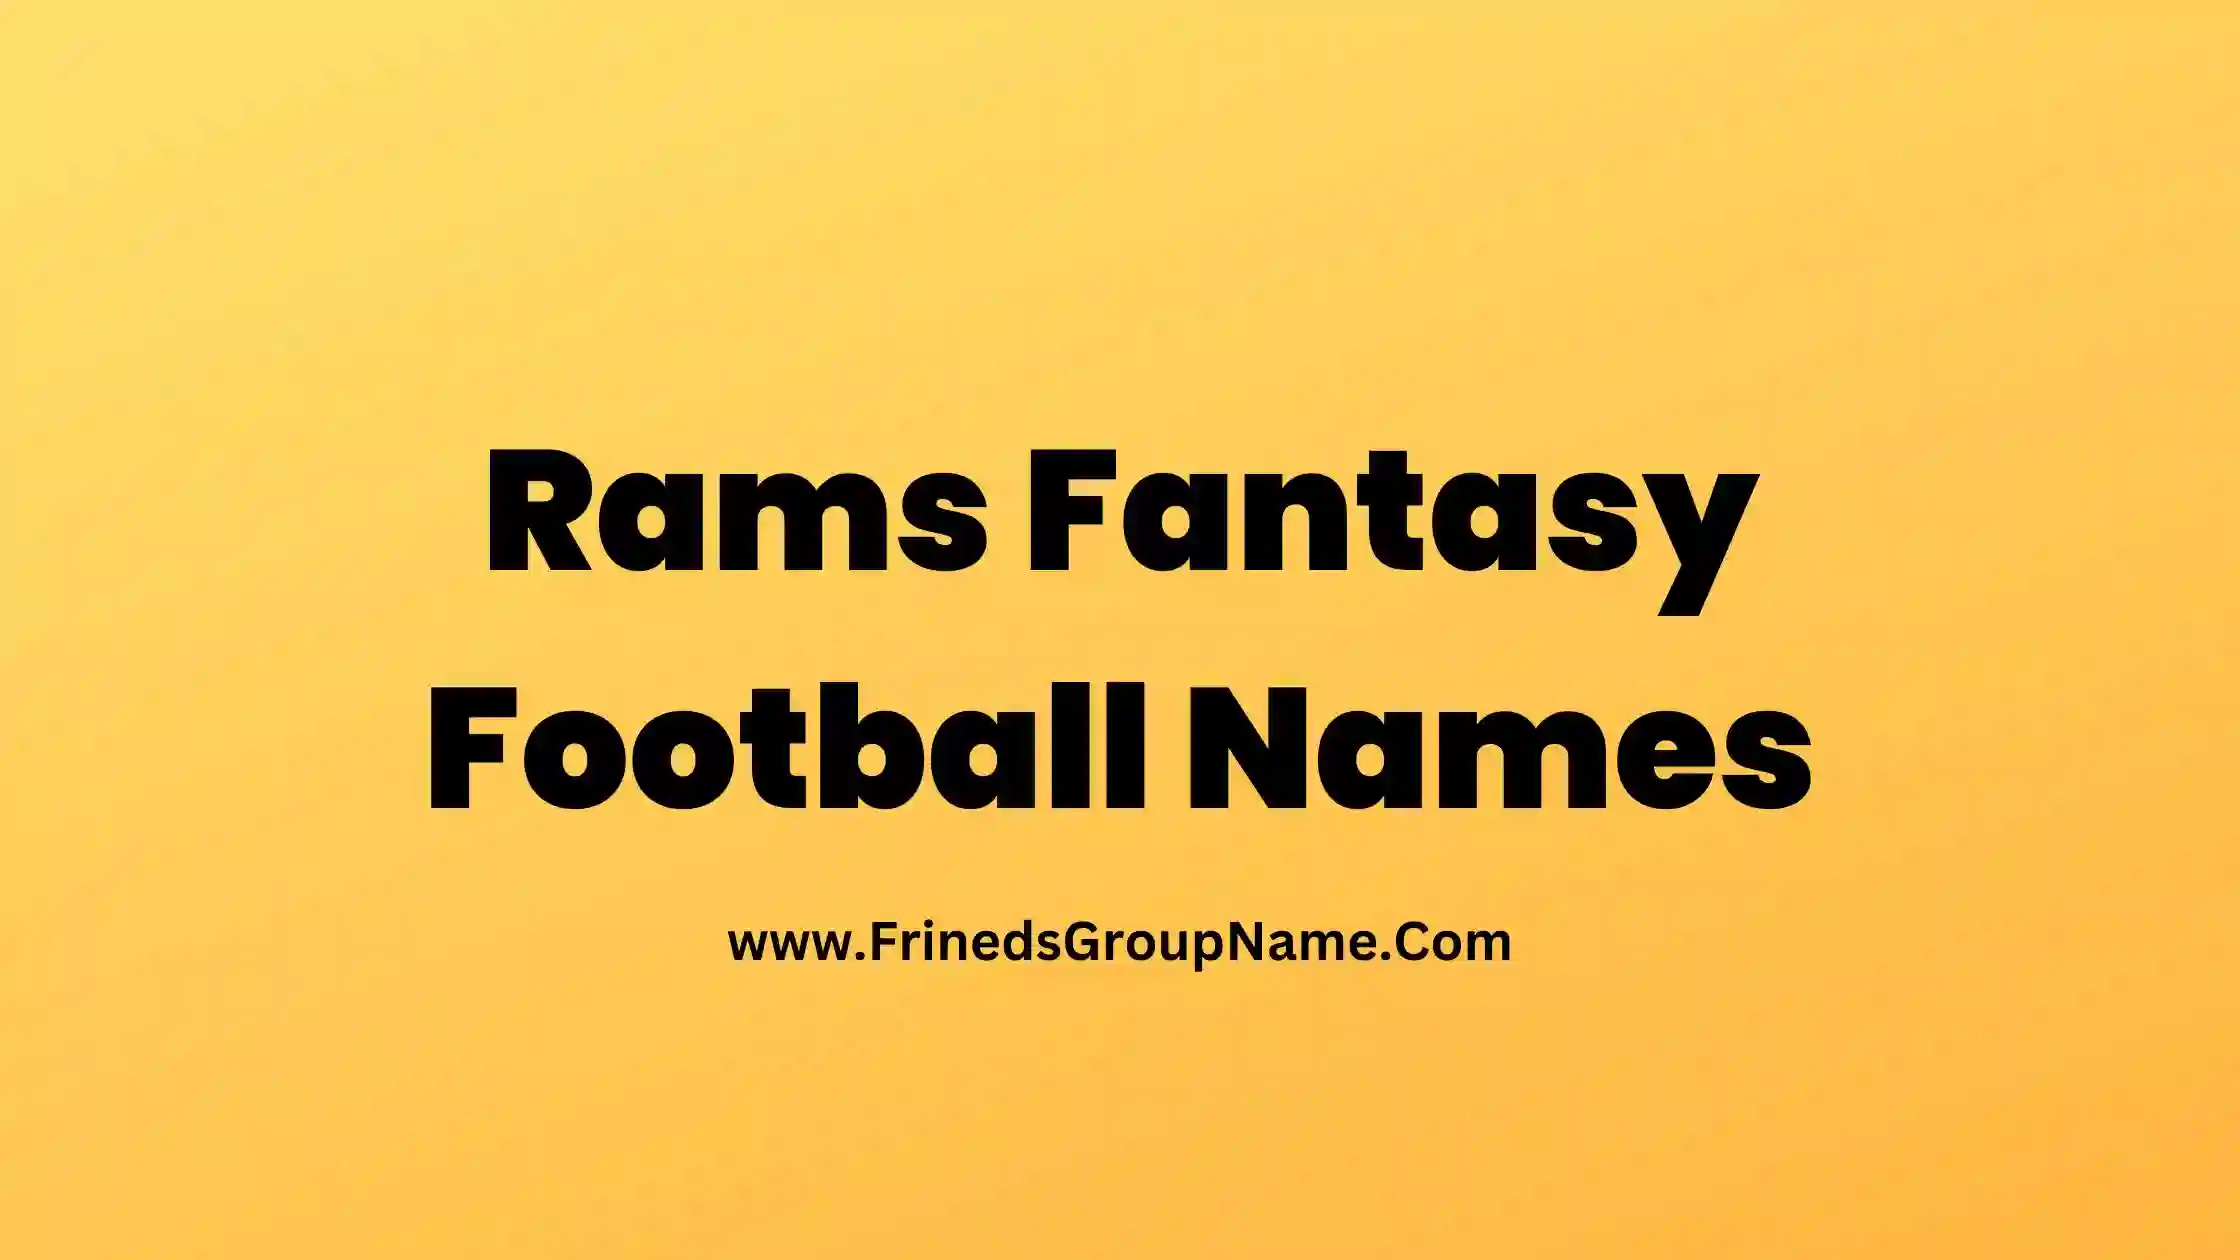 Rams Fantasy Football Names